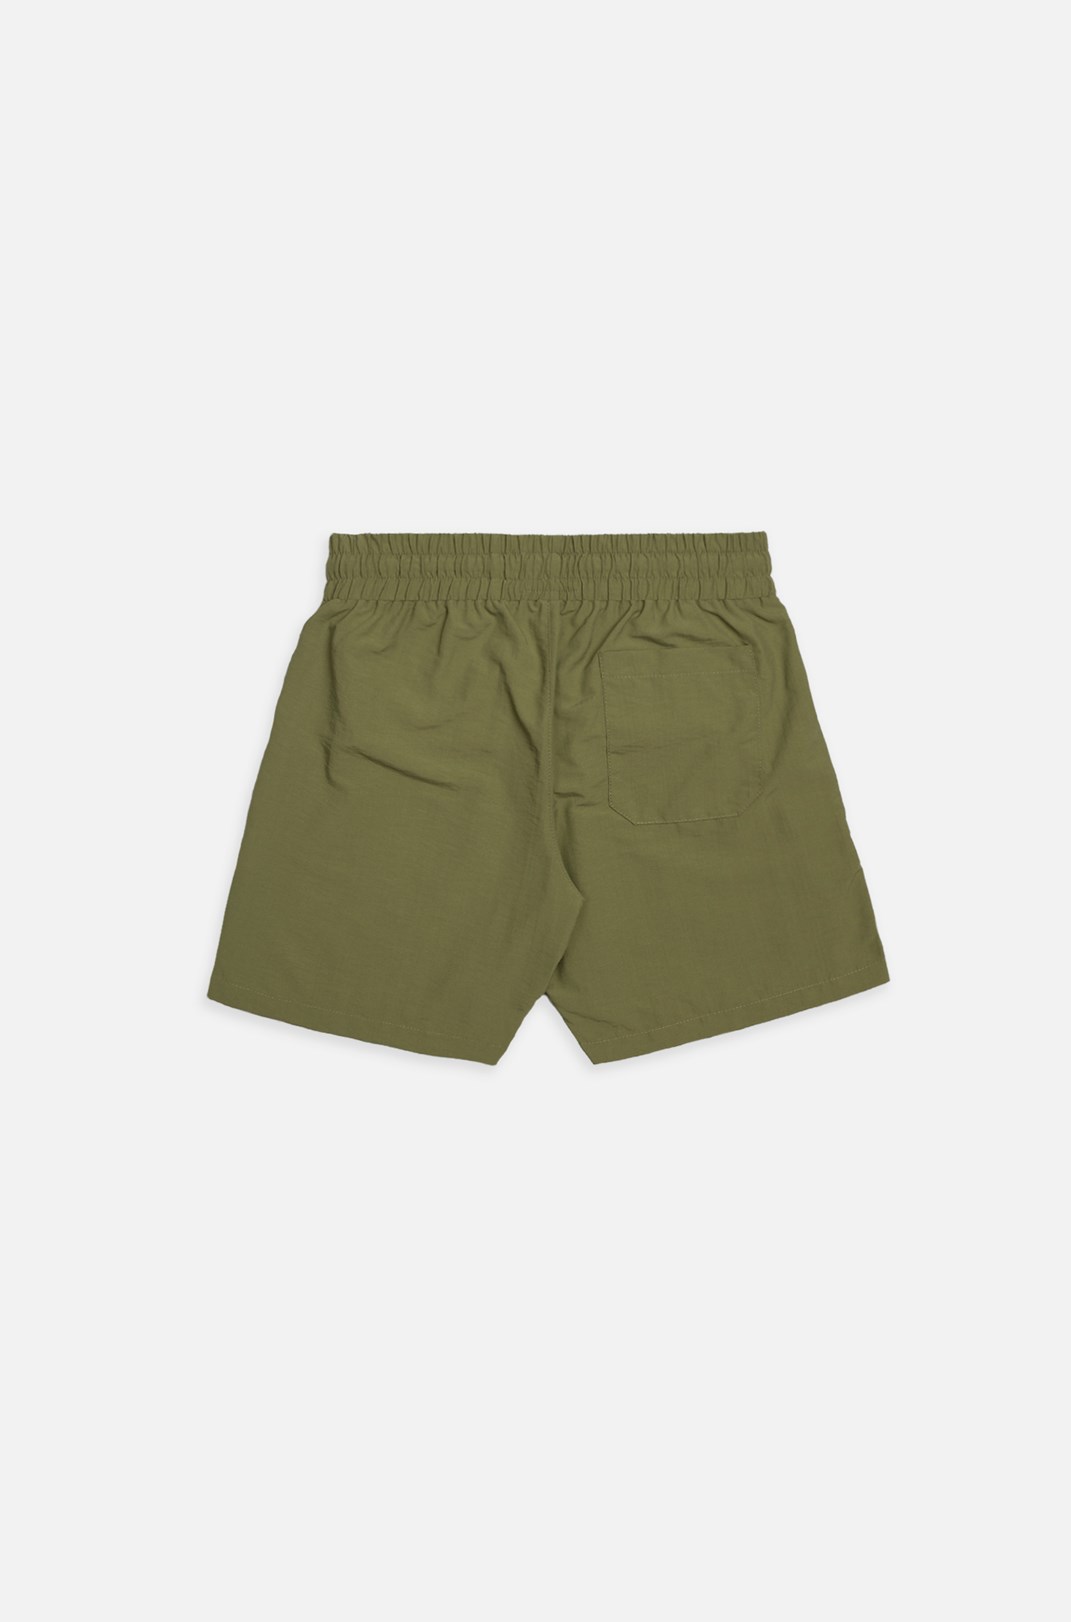 Shorts Approve Verde Militar